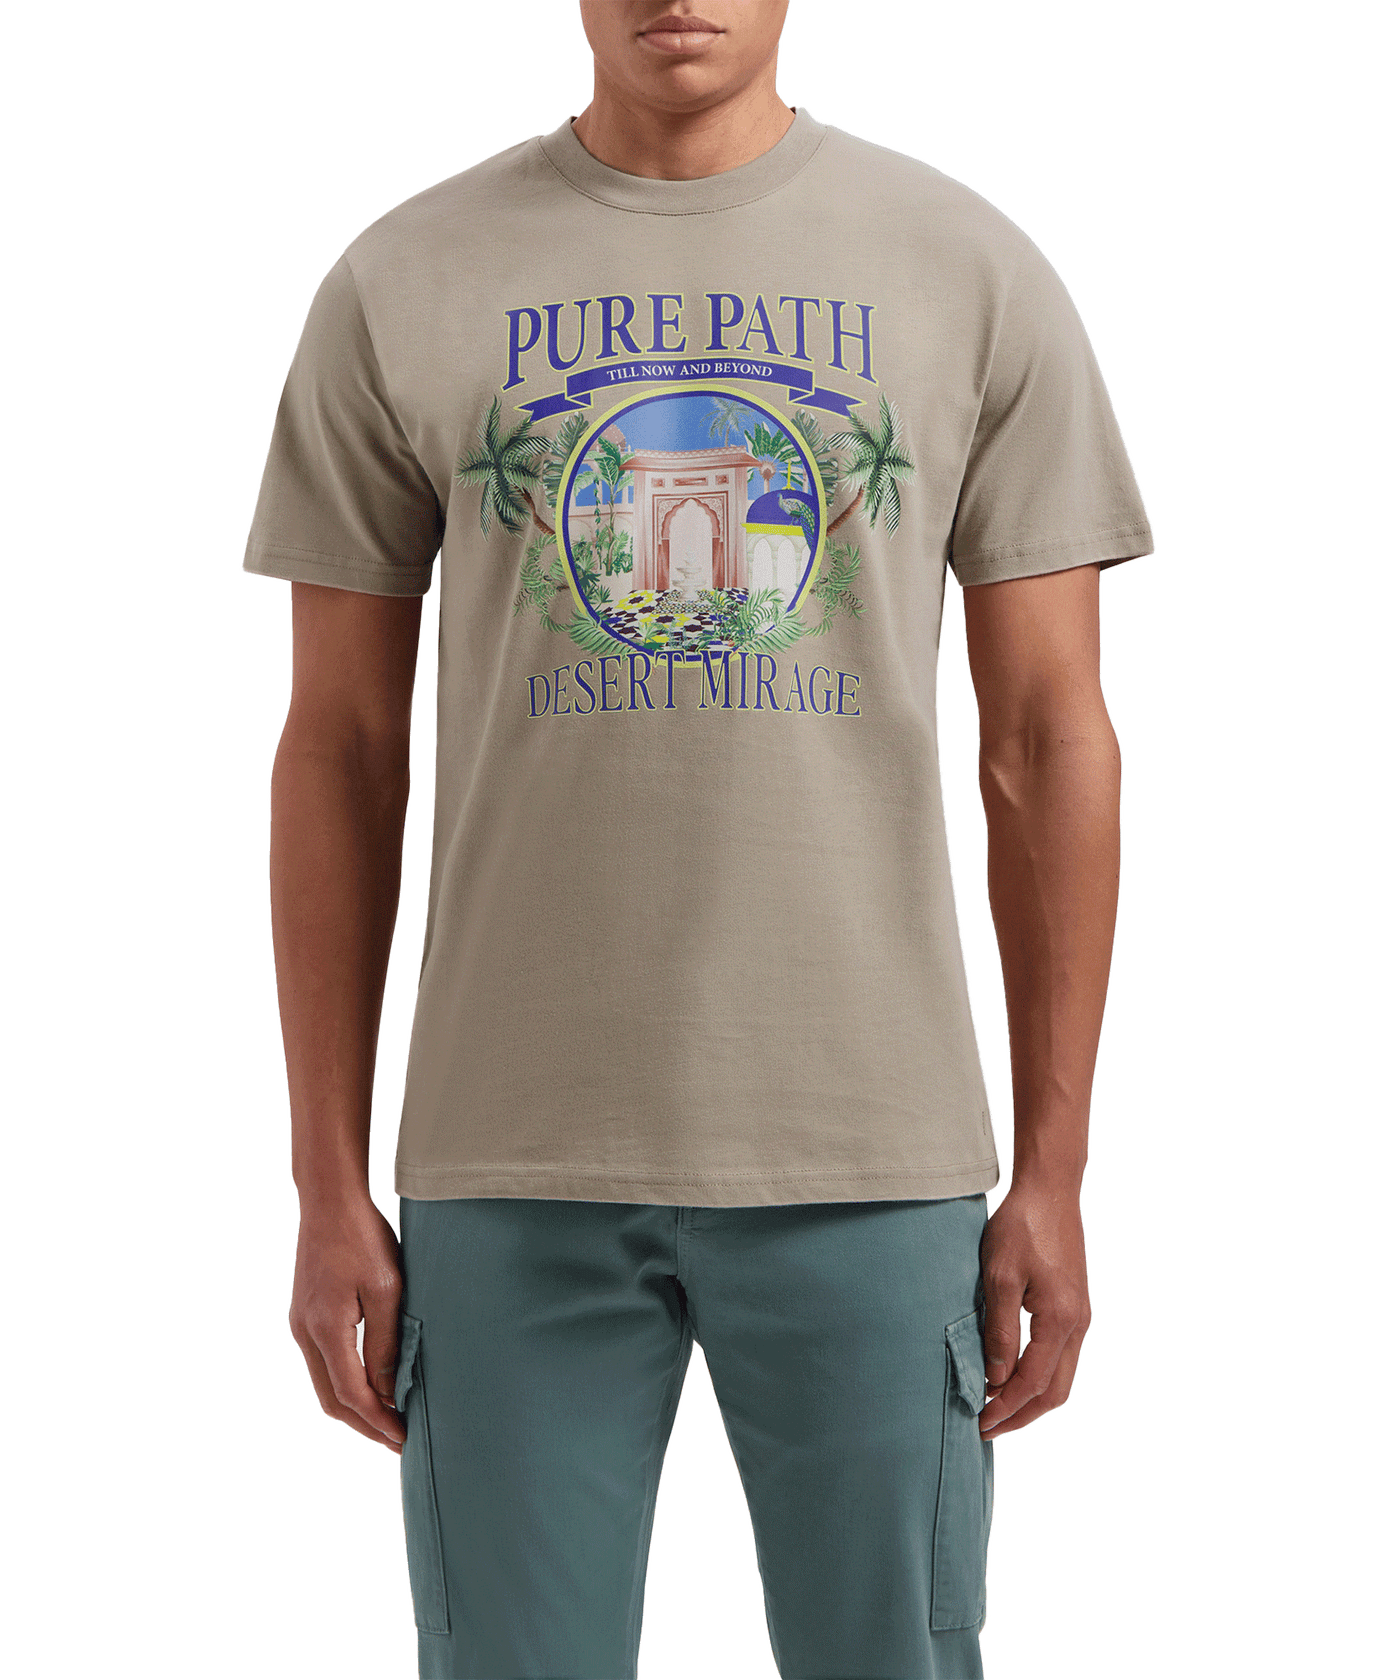 Pure Path - 24010110 - Desert Mirage T-shirt - Taupe